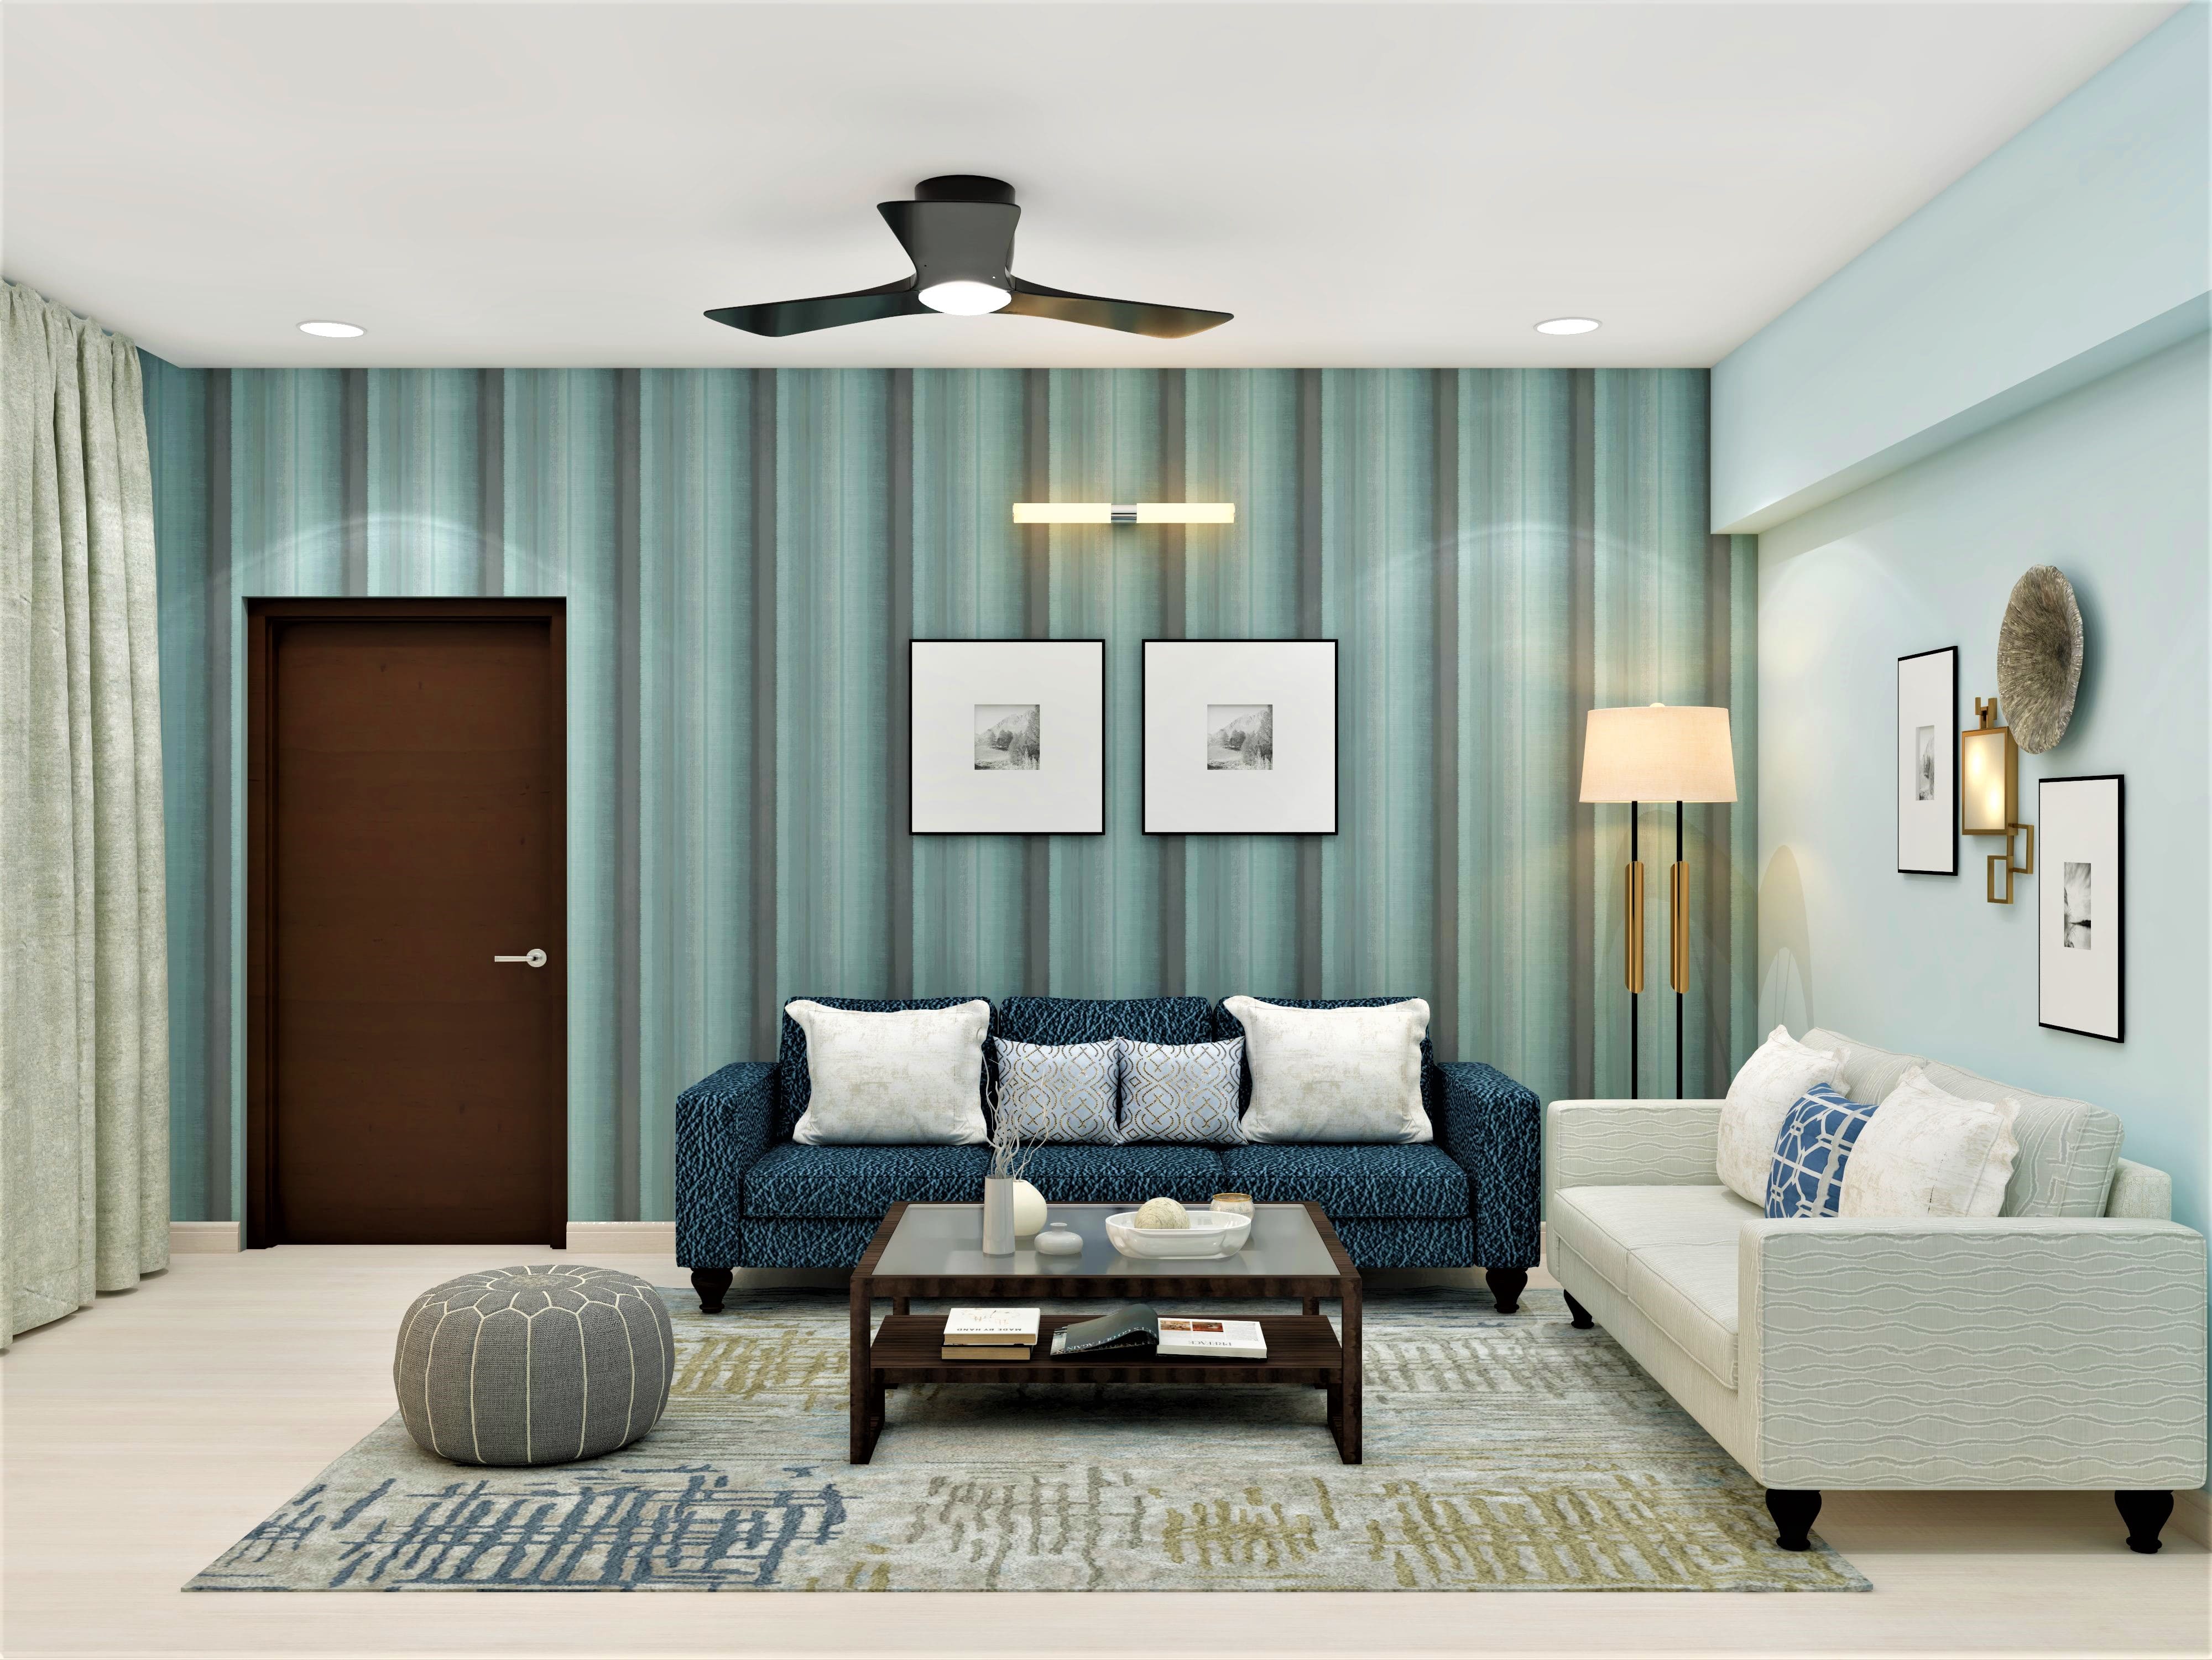 Minimalistic living room design in refreshing blue hues - Beautiful Homes